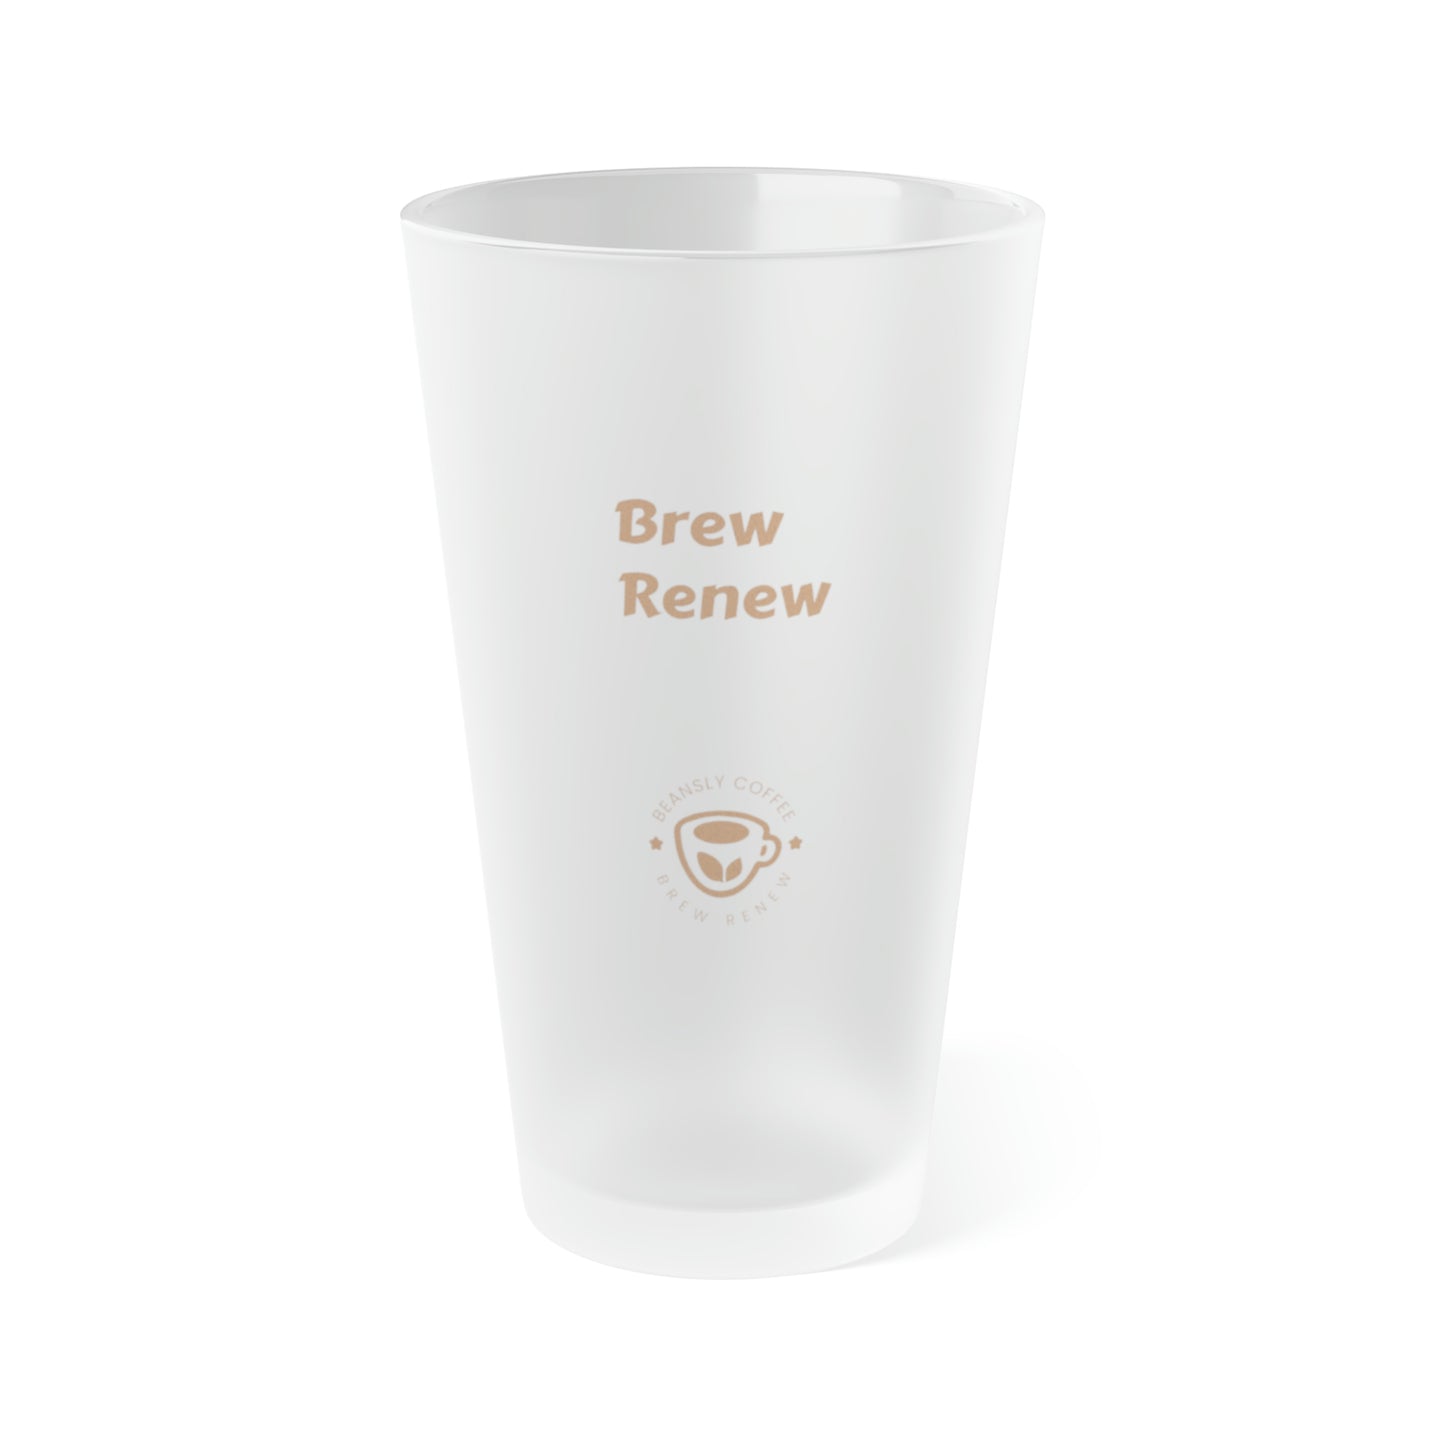 Brew-Renew Pint Glass, 16oz